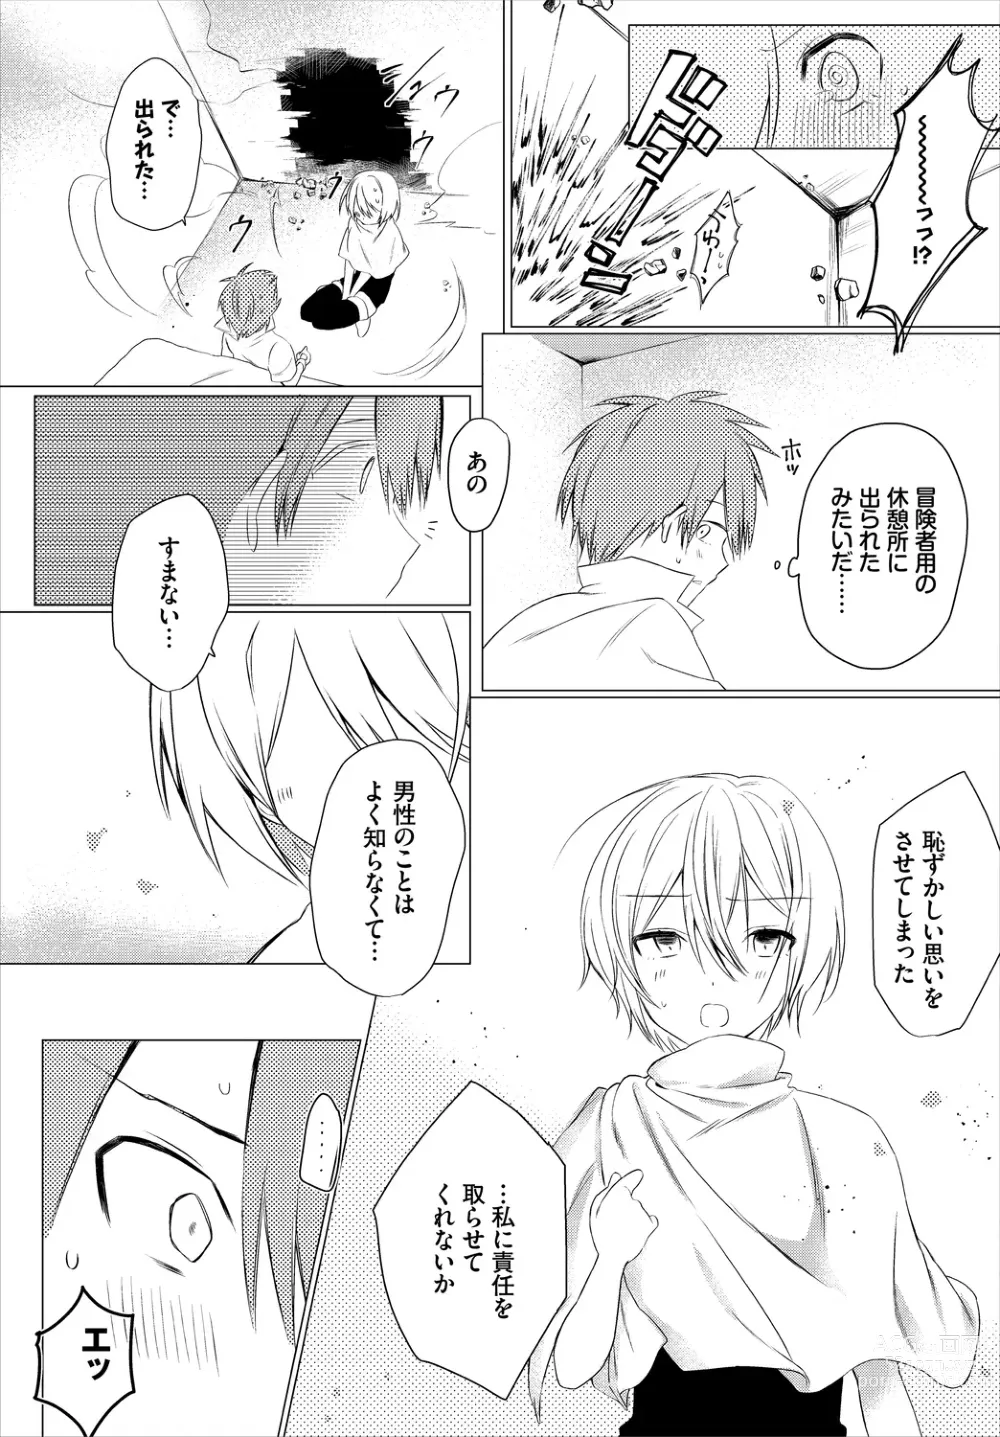 Page 169 of manga Koi-in Rhapsody